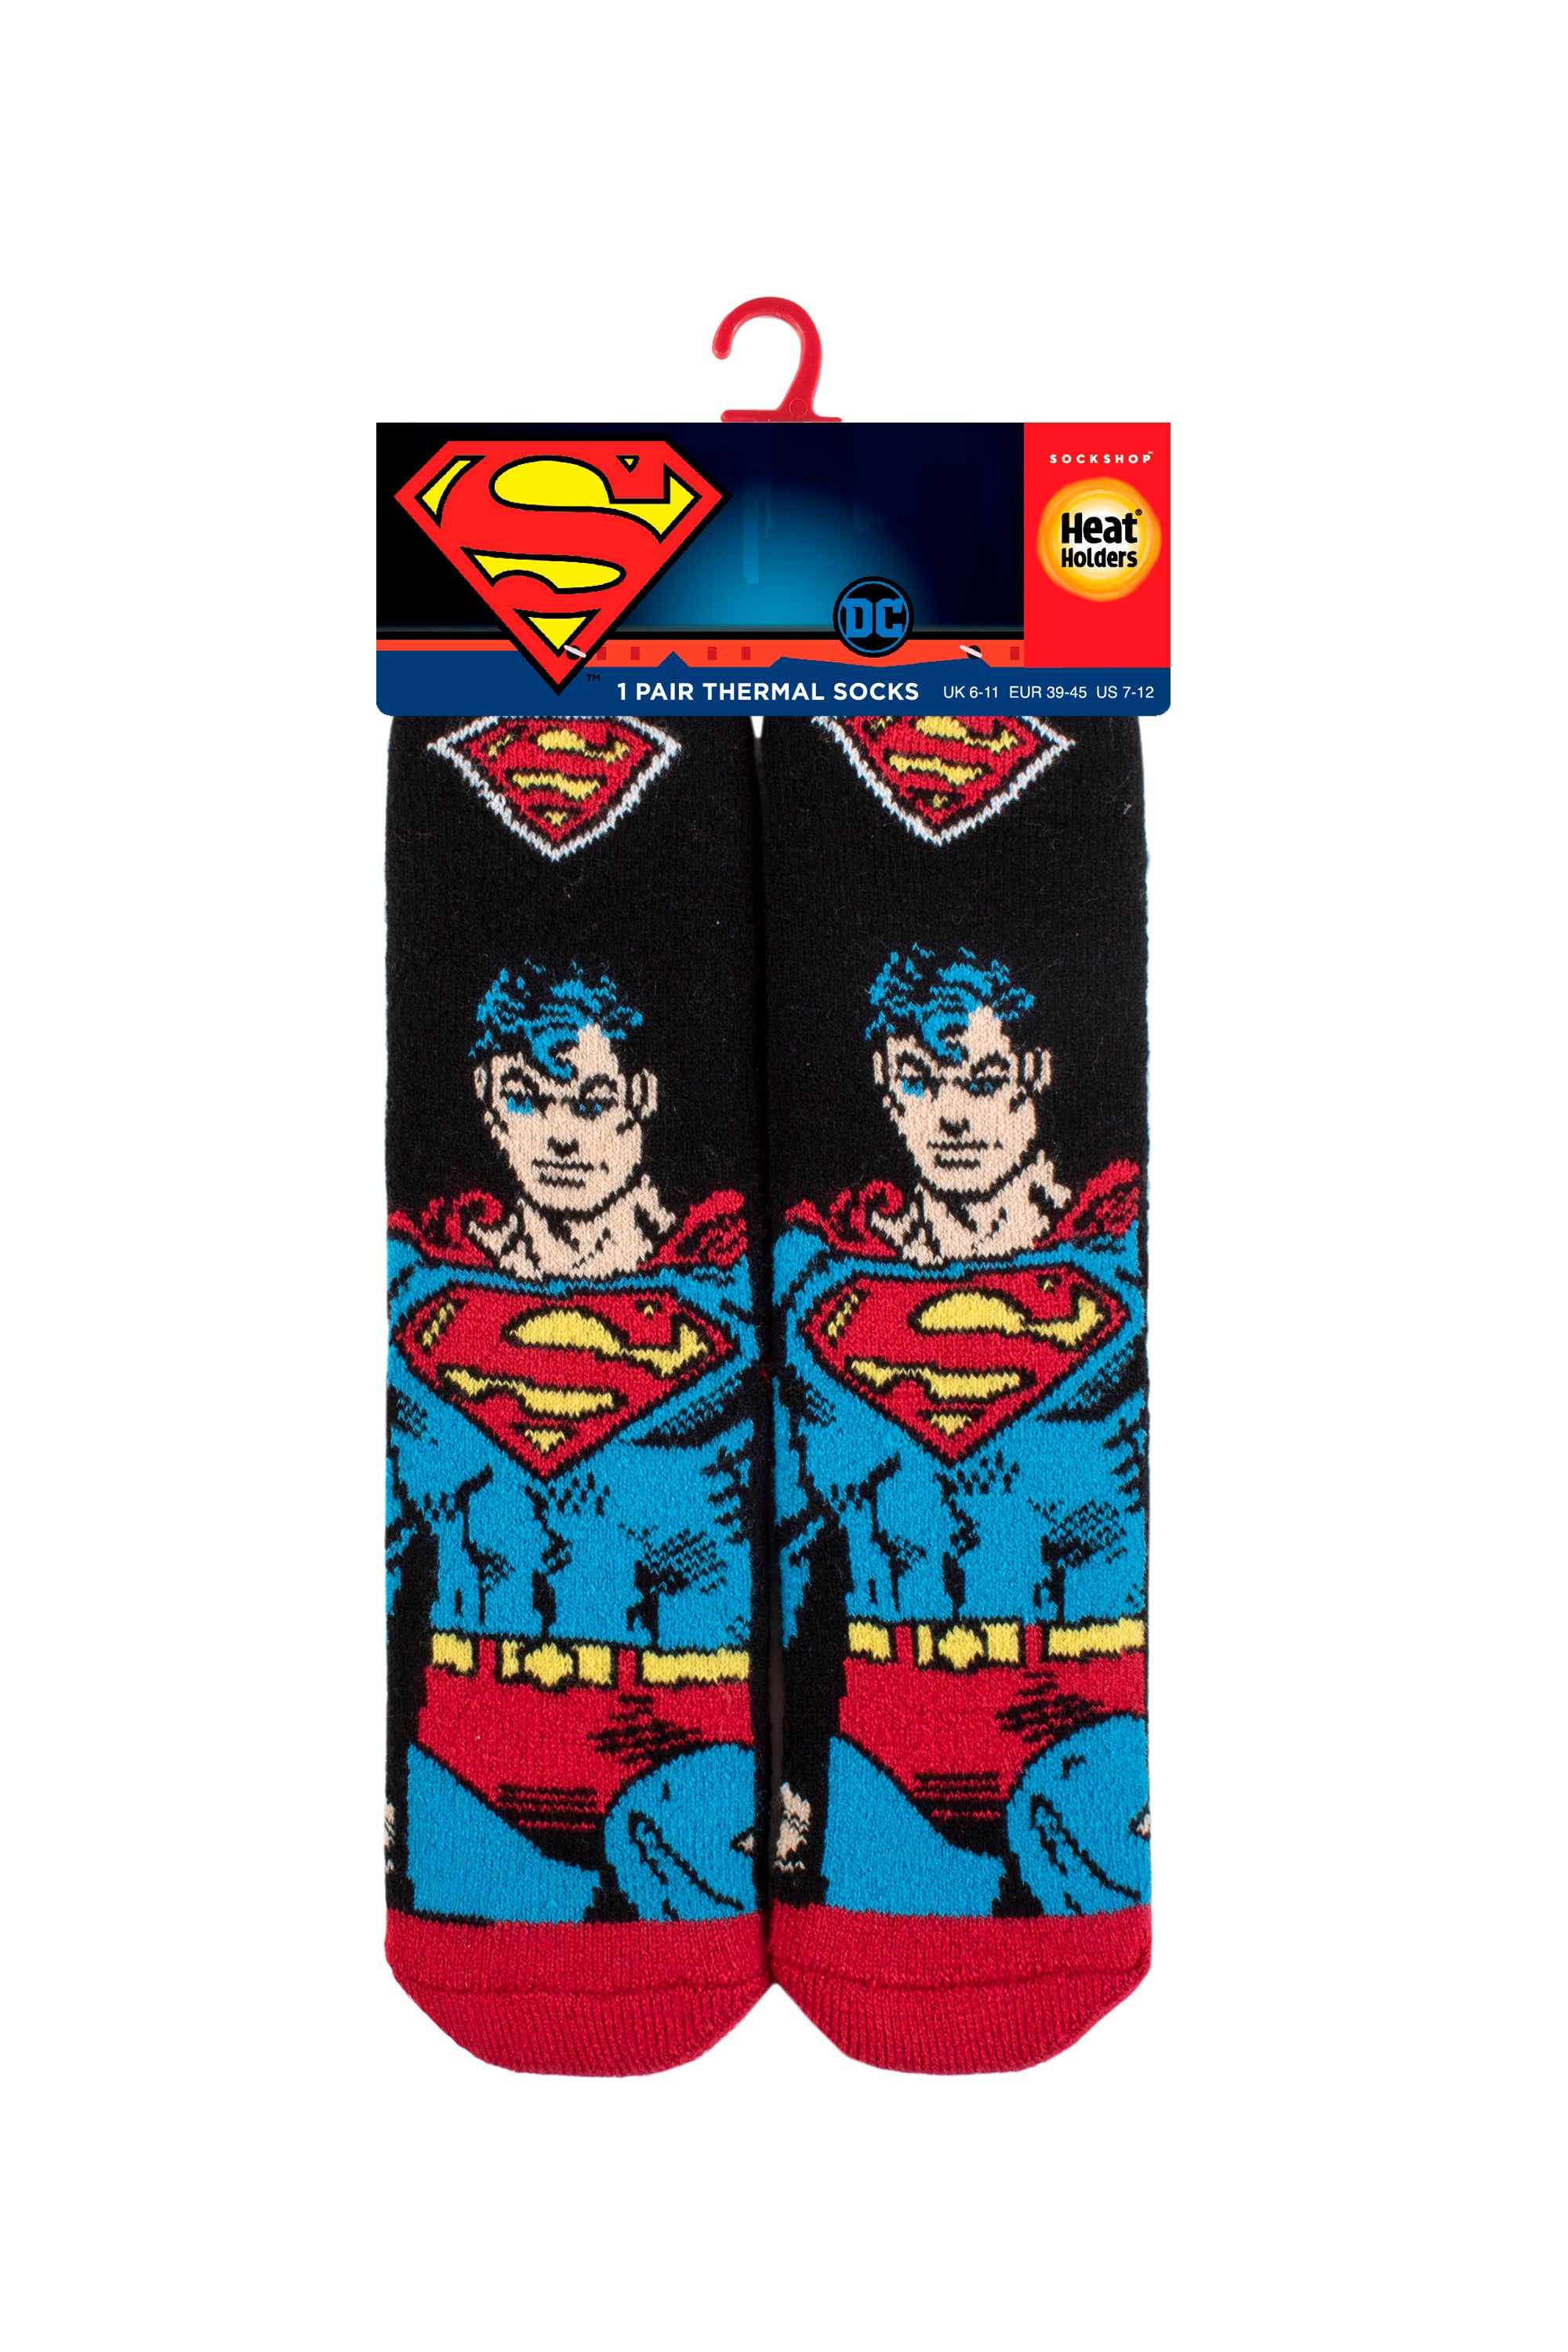 HEAT HOLDERS Lite Licensed DC Character Socks-Superman-Mens 6/11